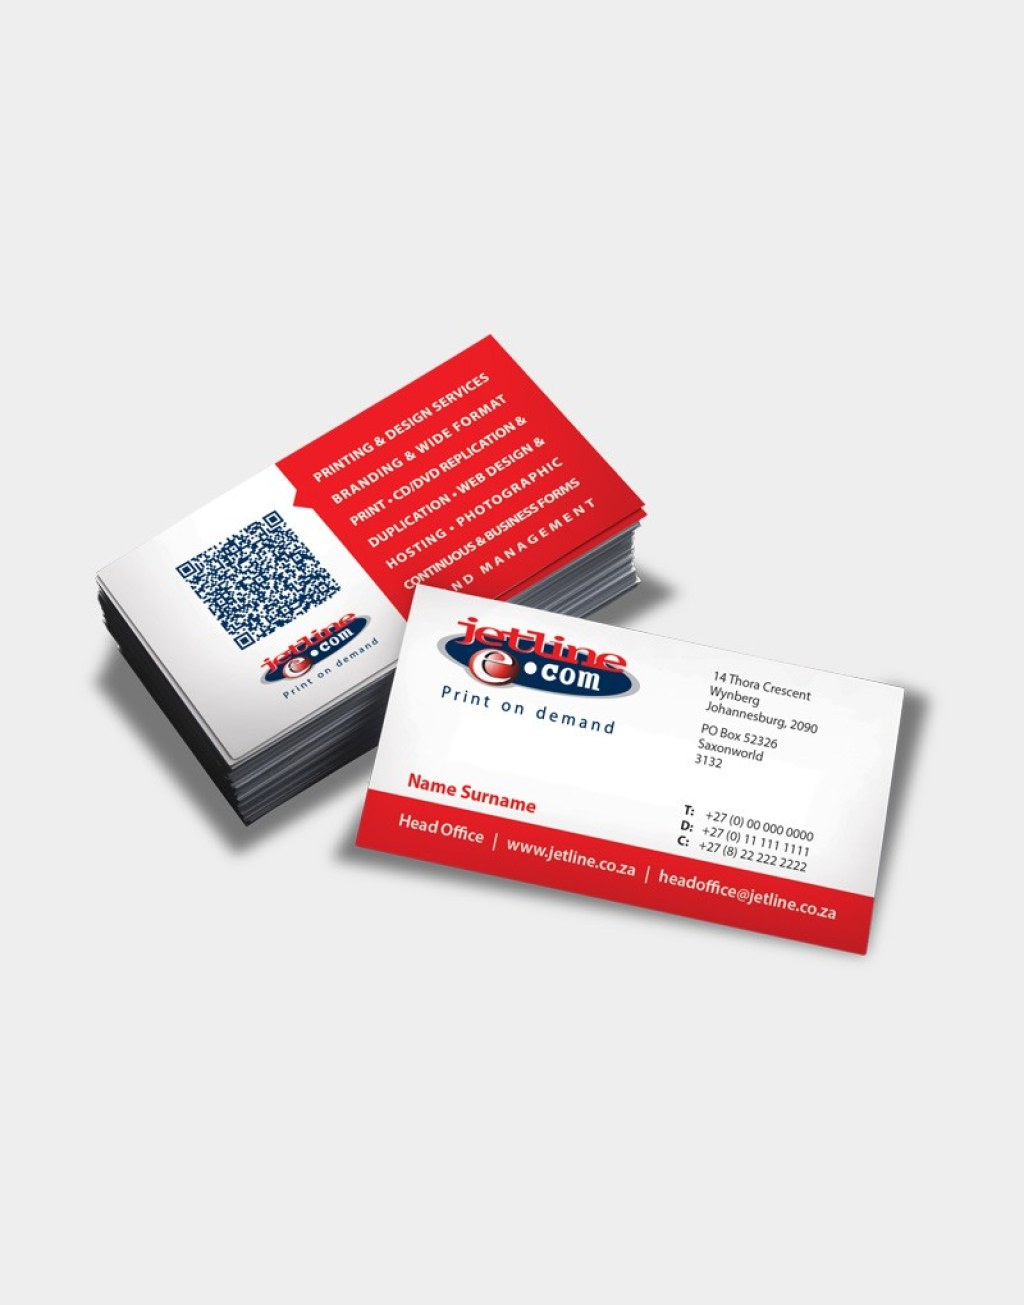 print a business card near me - Business Card Printing  Business Cards  Jetline Printing